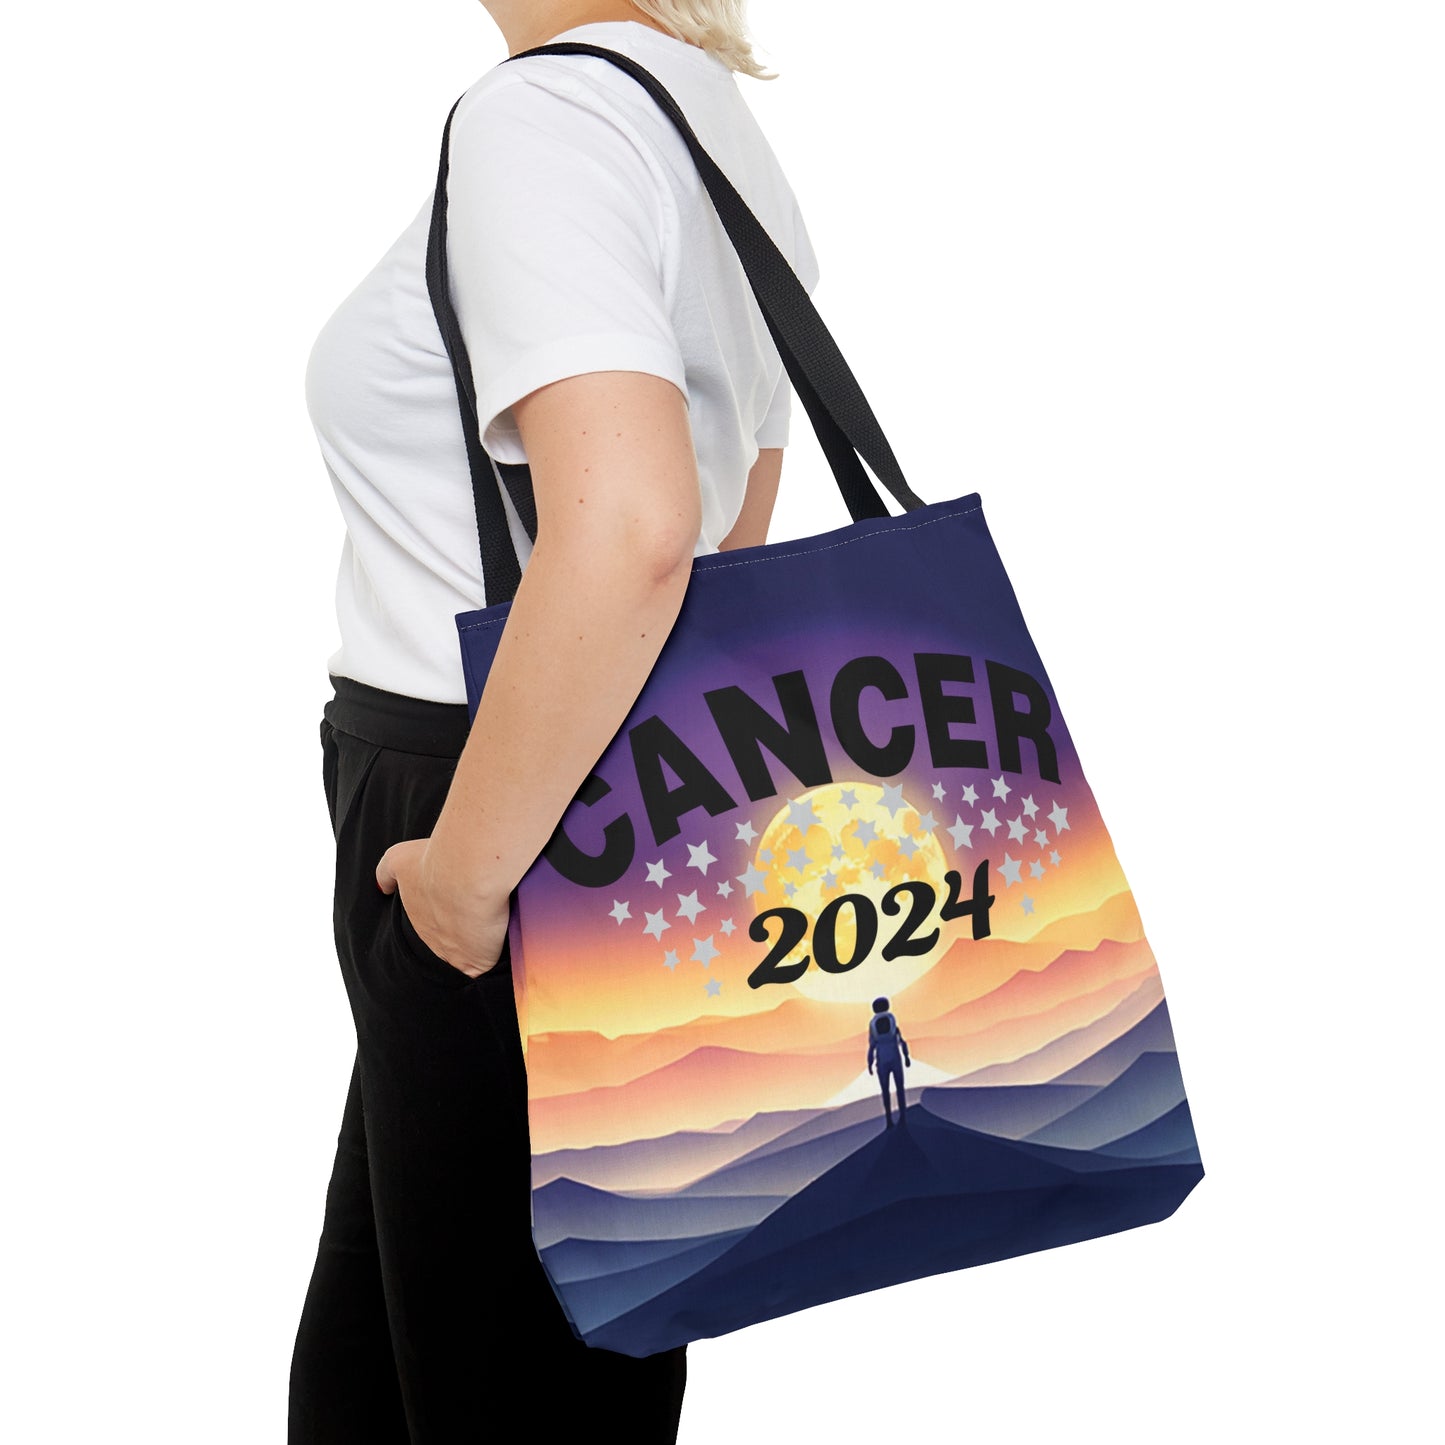 Cancer 2024 Tote Bag